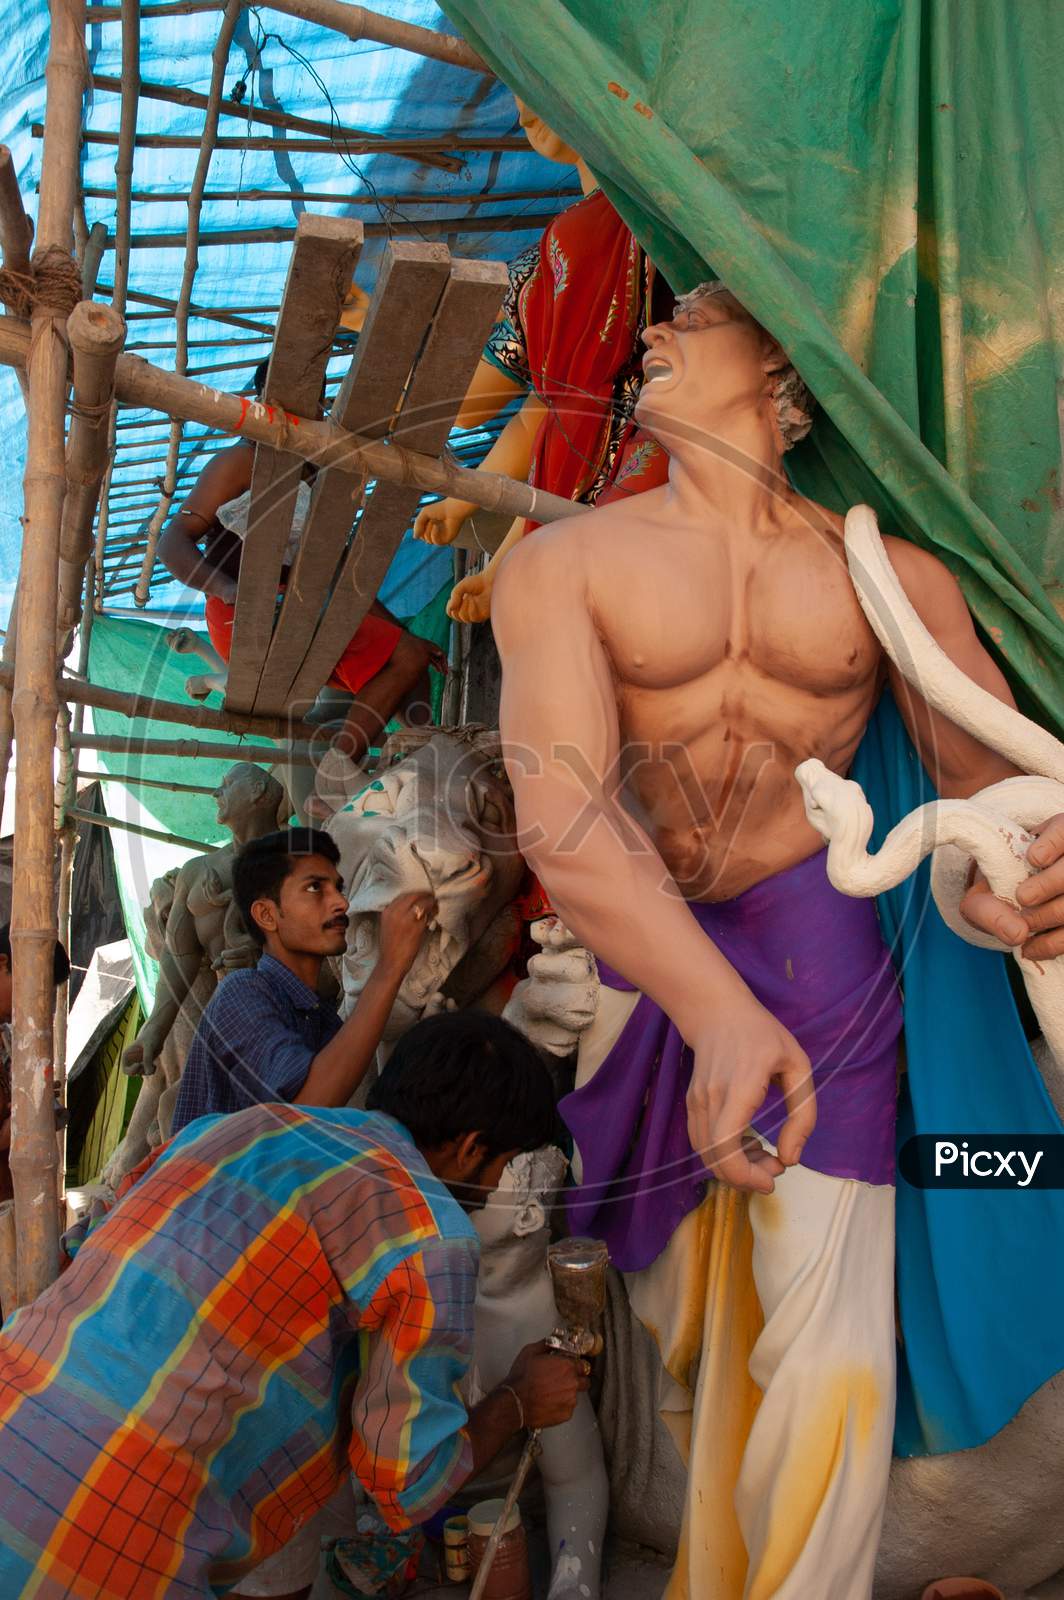 Goddess Durga Idols In Making At Workshops In Kumortuli, Kolkata